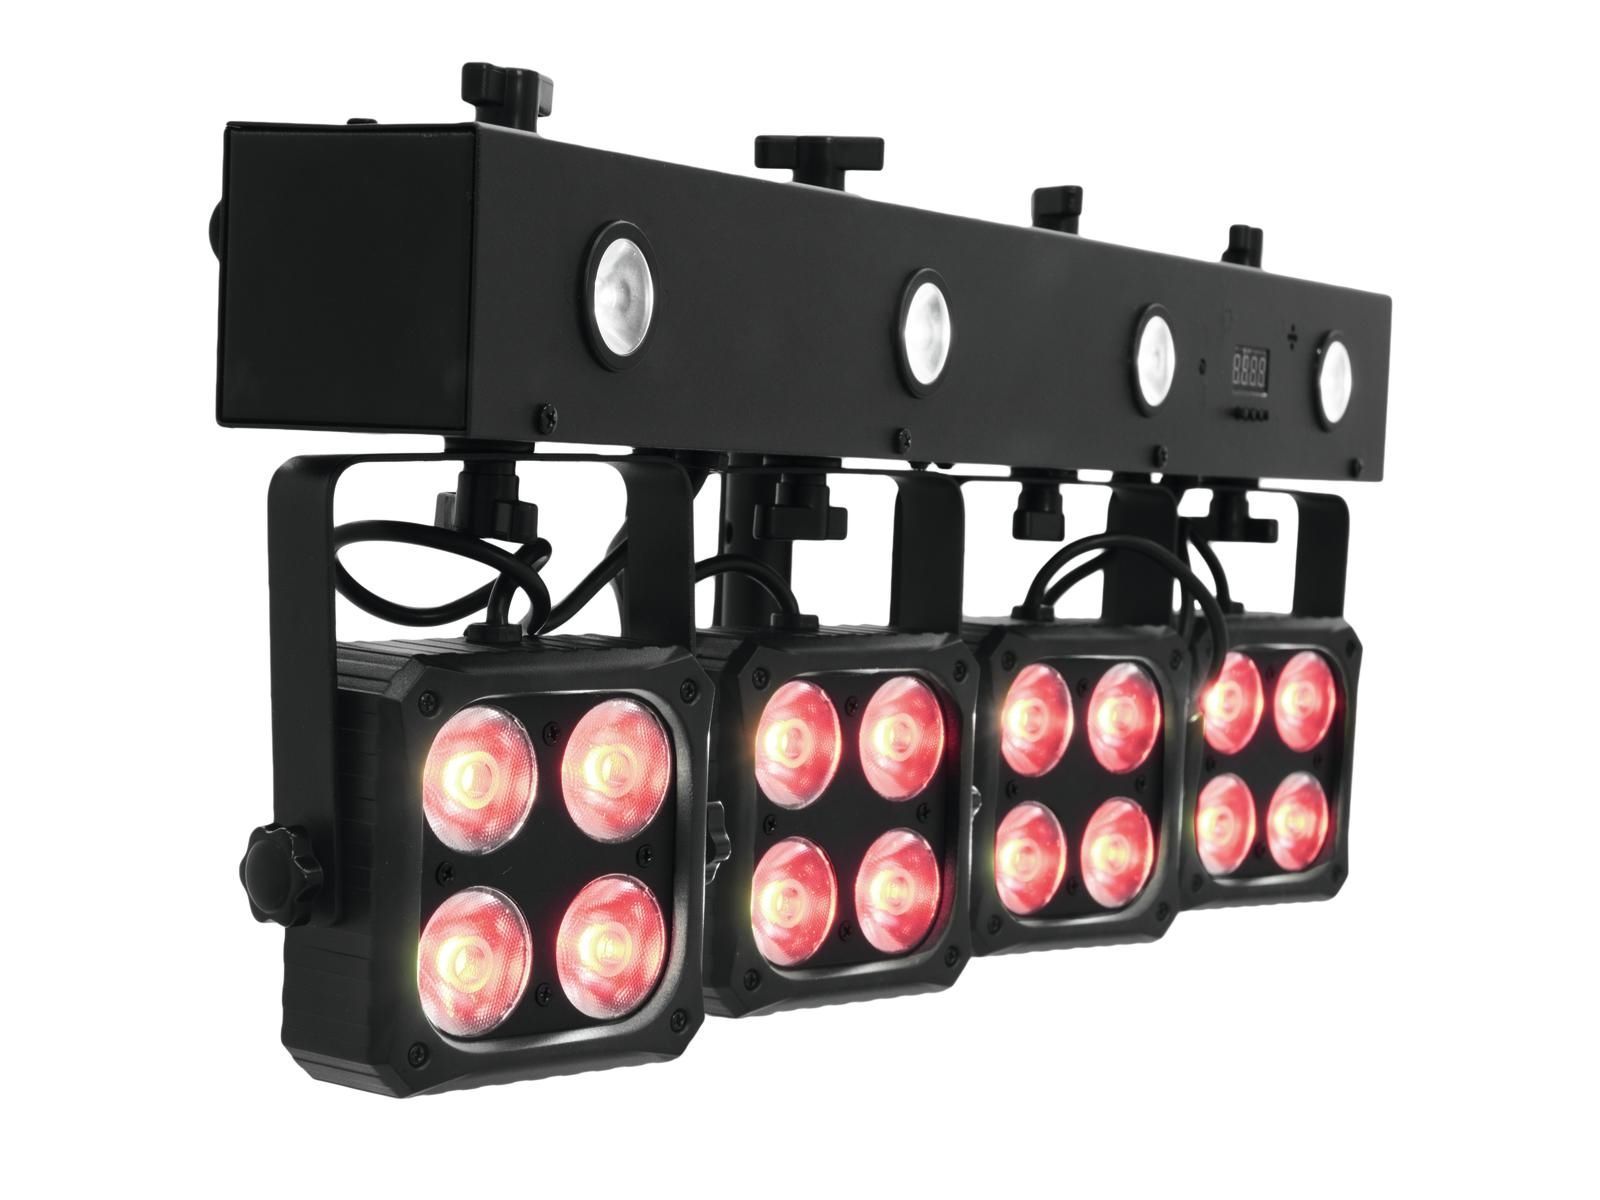 EUROLITE LED KLS 180 Kompakt-Lichtset, LED Lichtanlage